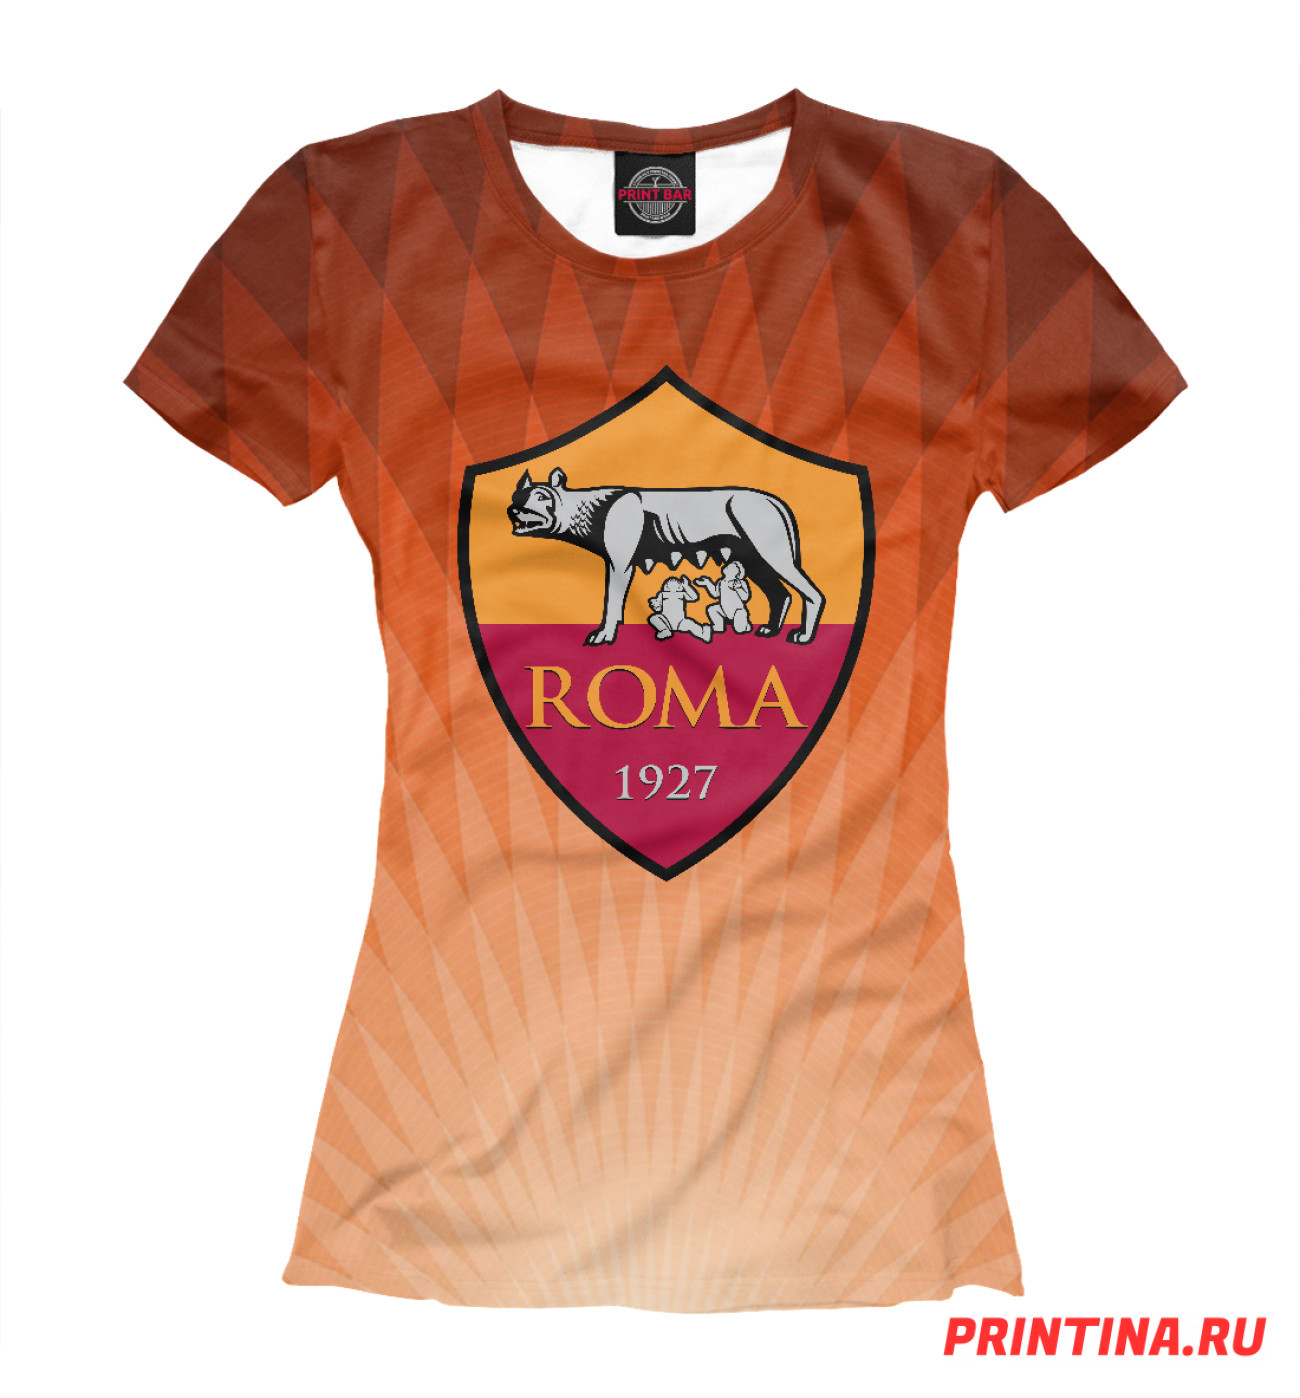 Женская Футболка ROMA, артикул: RMA-217438-fut-1